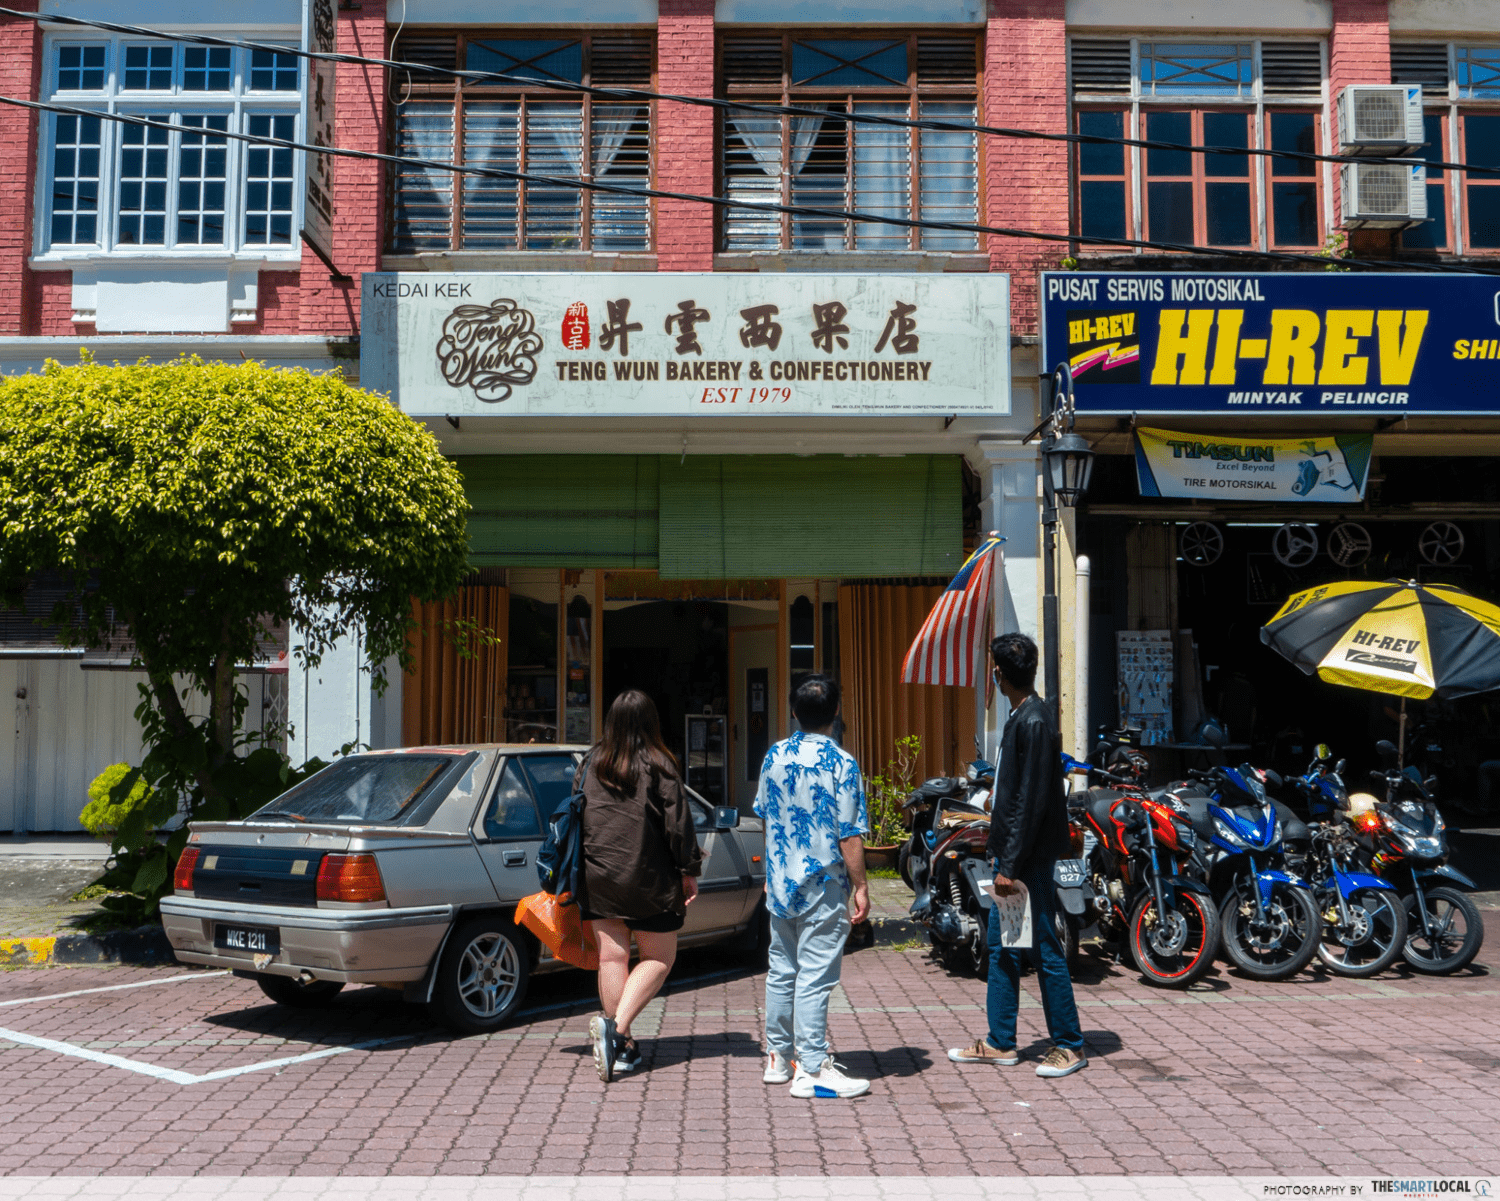 Road trips in Malaysia near KL - Teng Wun Bakery